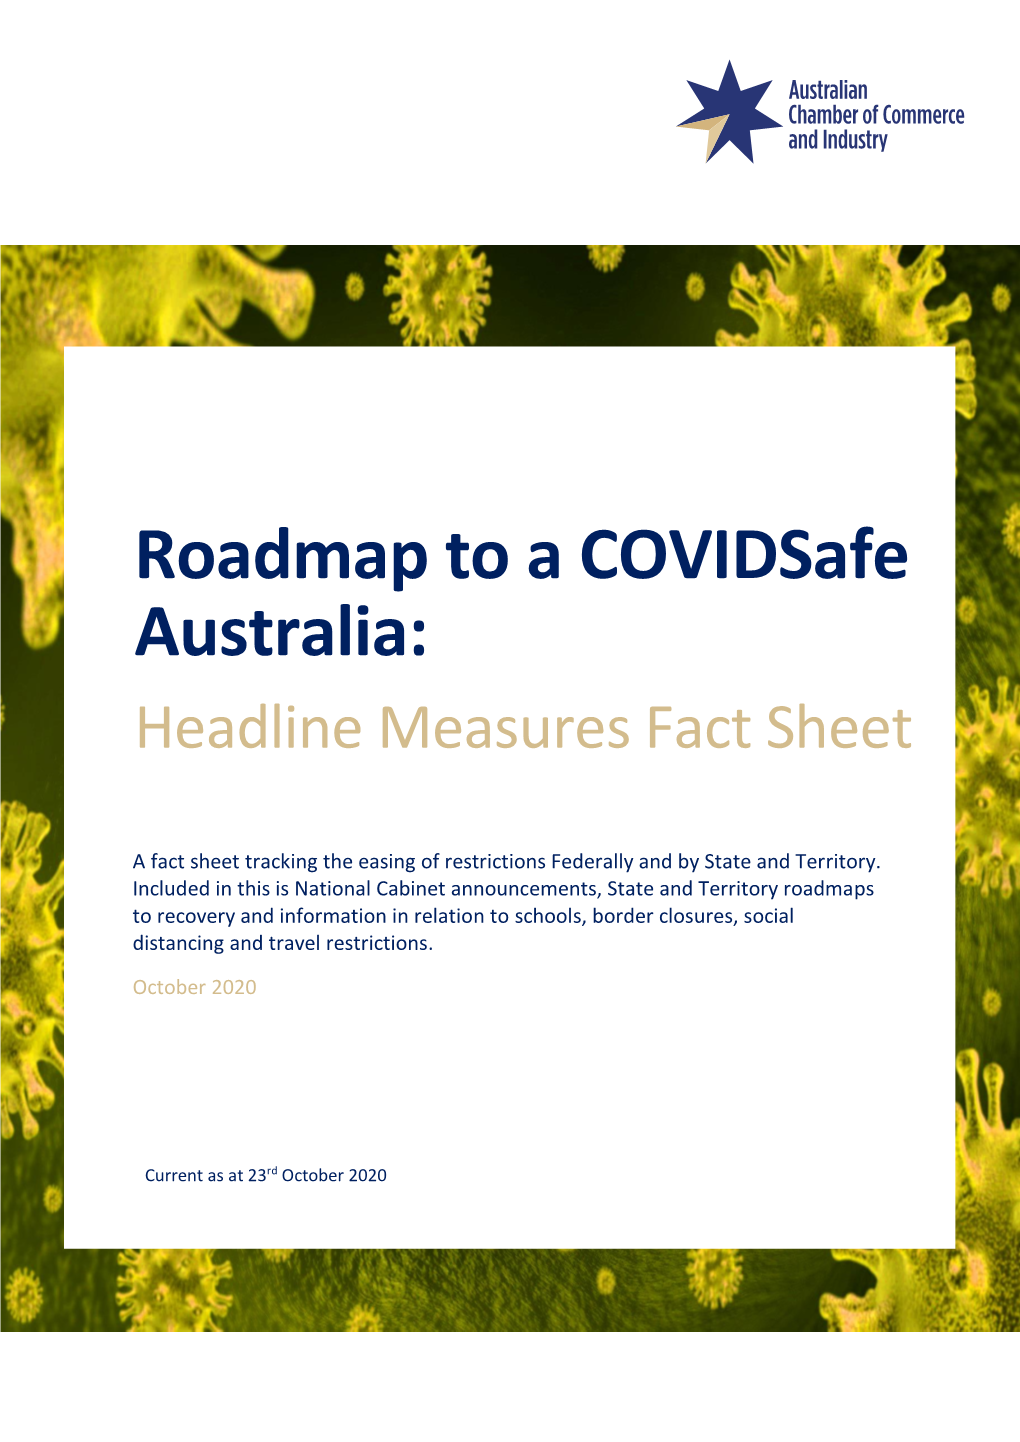 Roadmap Out: Headline Measures Fact Sheet